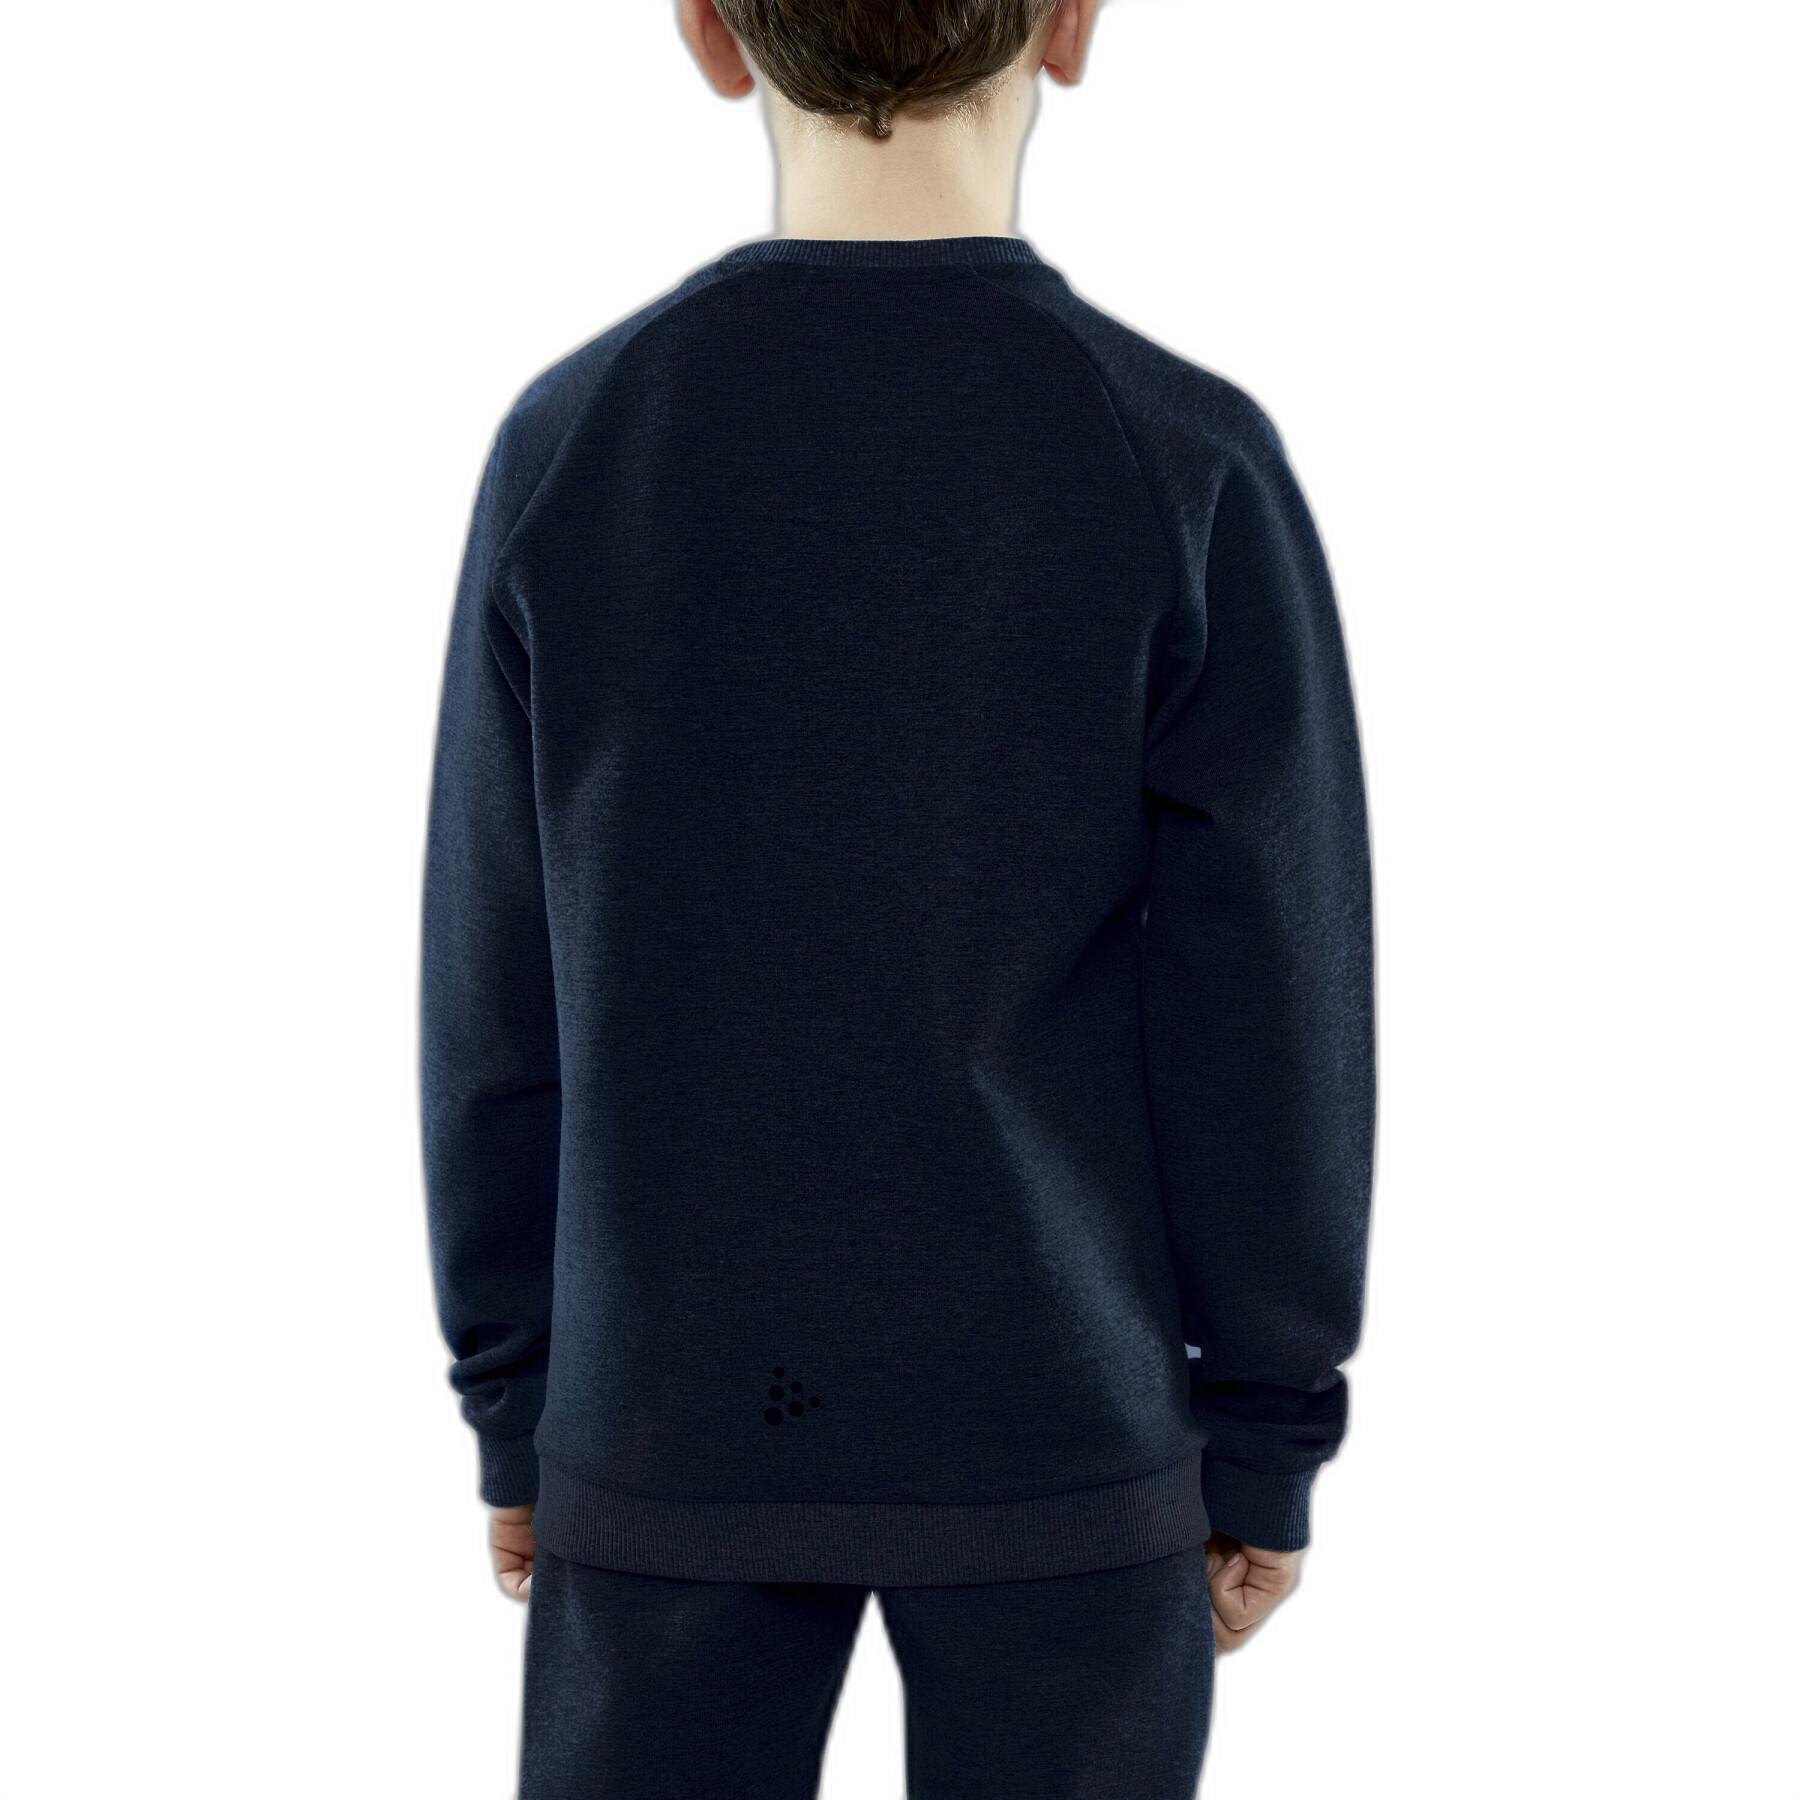 Sweatshirt round neck child Craft core soul